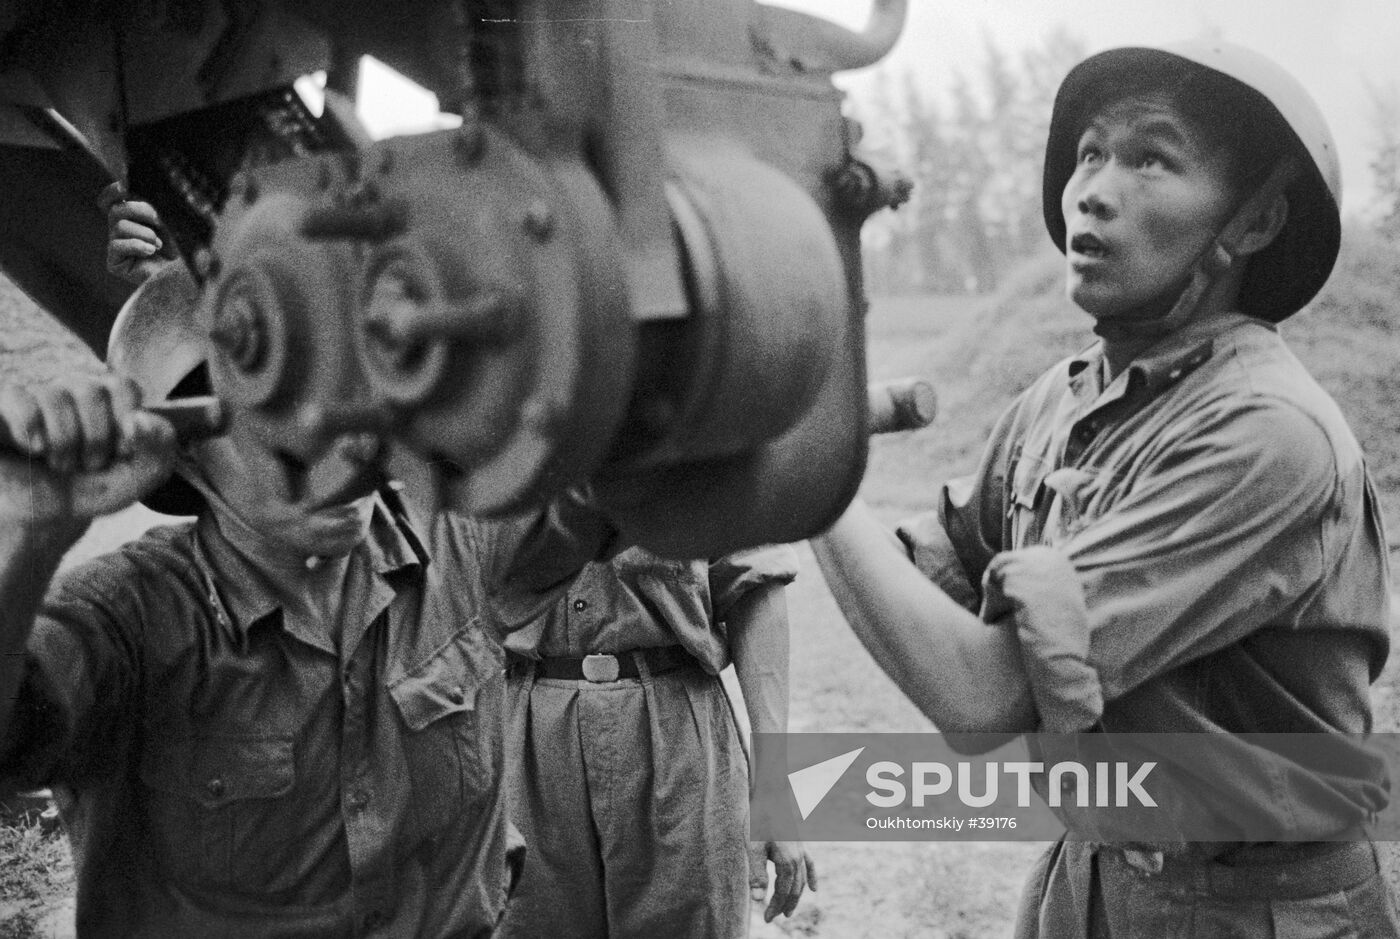 VIETNAM SOLDIERS MISSILE LAUNCHER